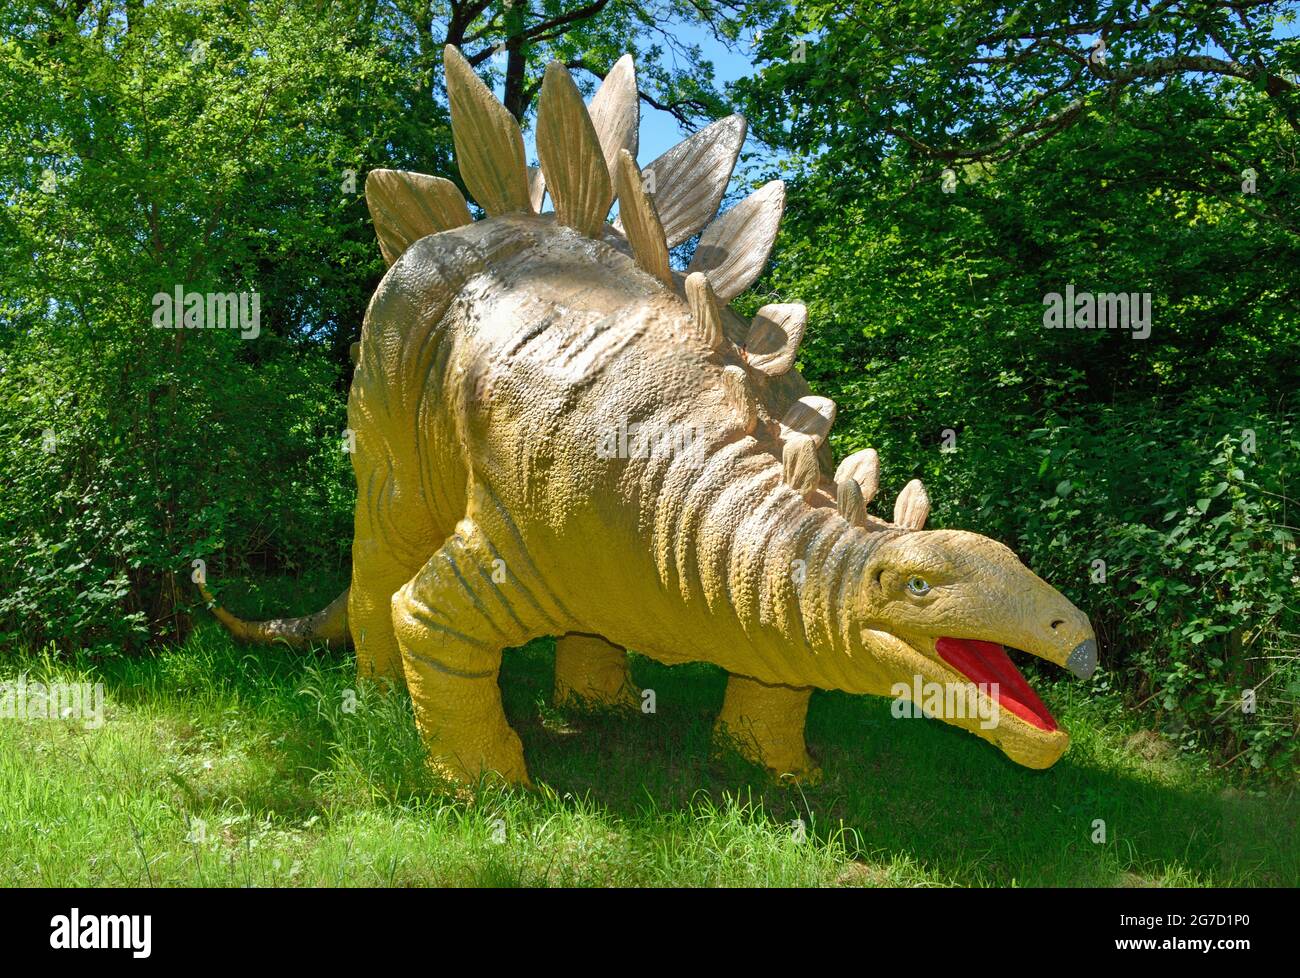 A model of a Stegosaurus dinosaur surrounded by trees. Stock Photo